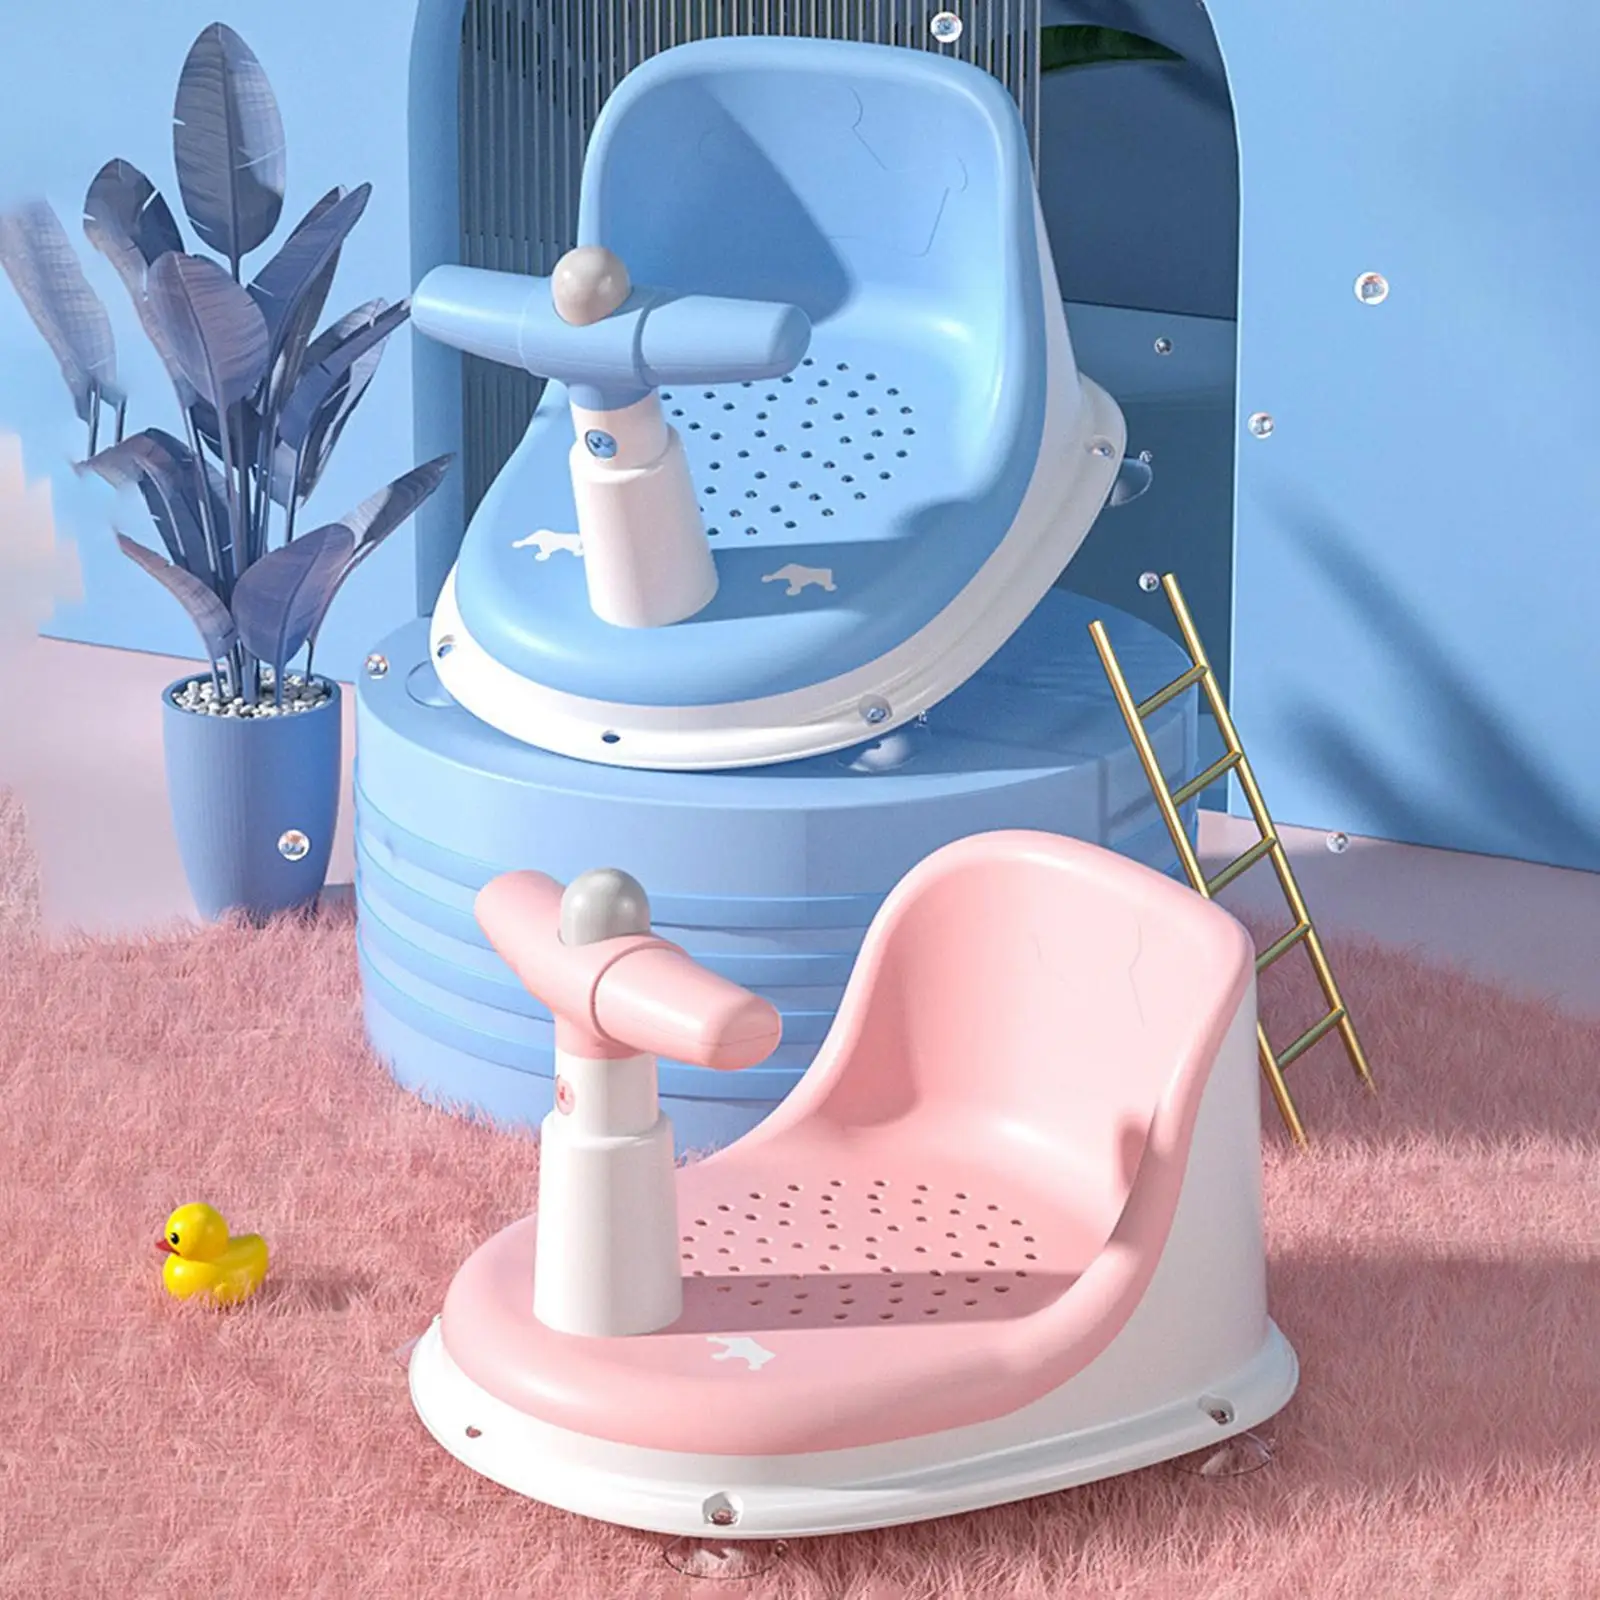 Baby Bathtub Seat Fashionable Stable Hanging for Bathroom Living Room Travel